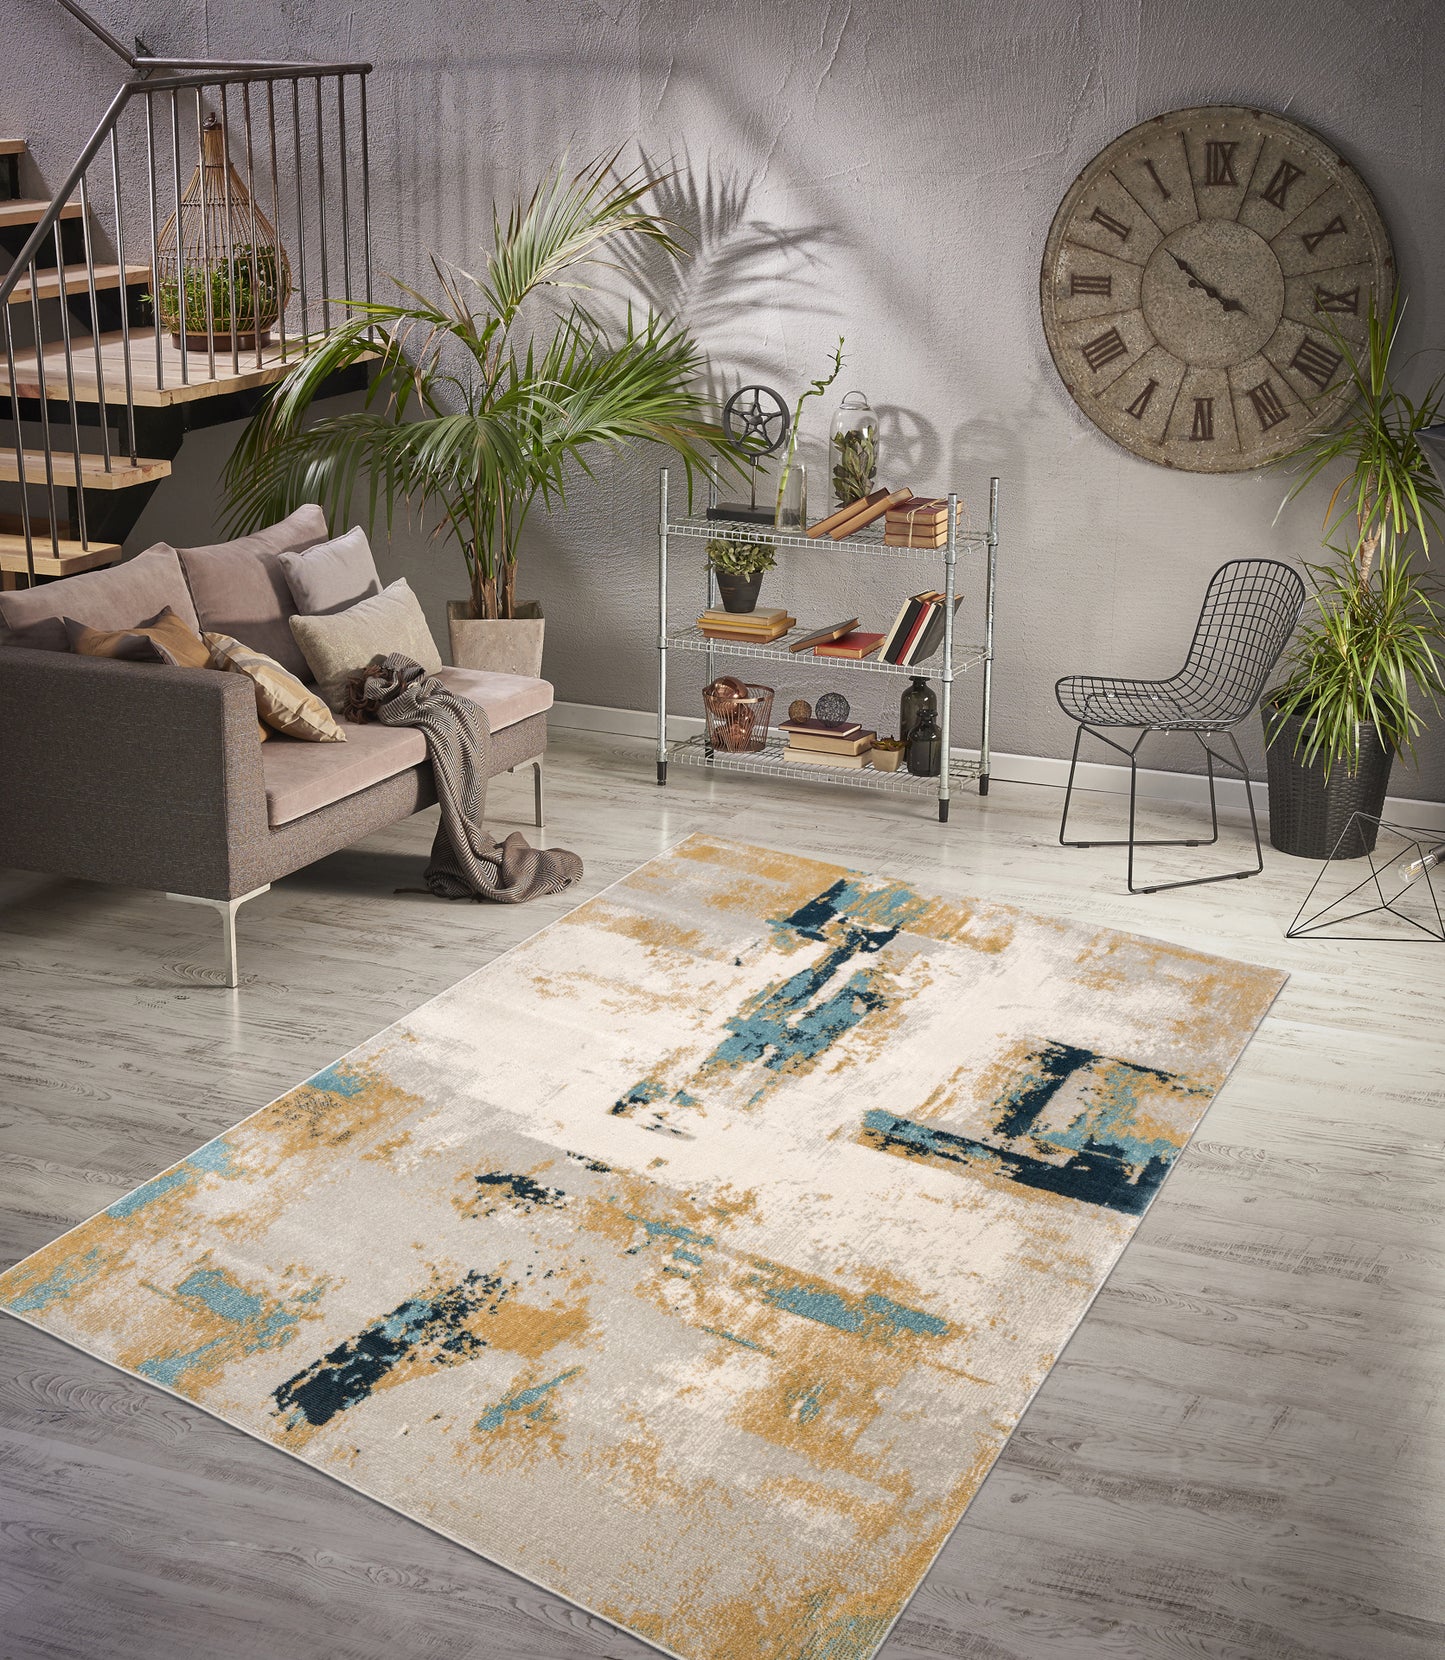 la dole rugs light dark orange turquoise beige rustic pattern abstract modern minimalistic area rug 8x10, 8x11 ft Large Living Room Carpet, Bedroom, Kitchen